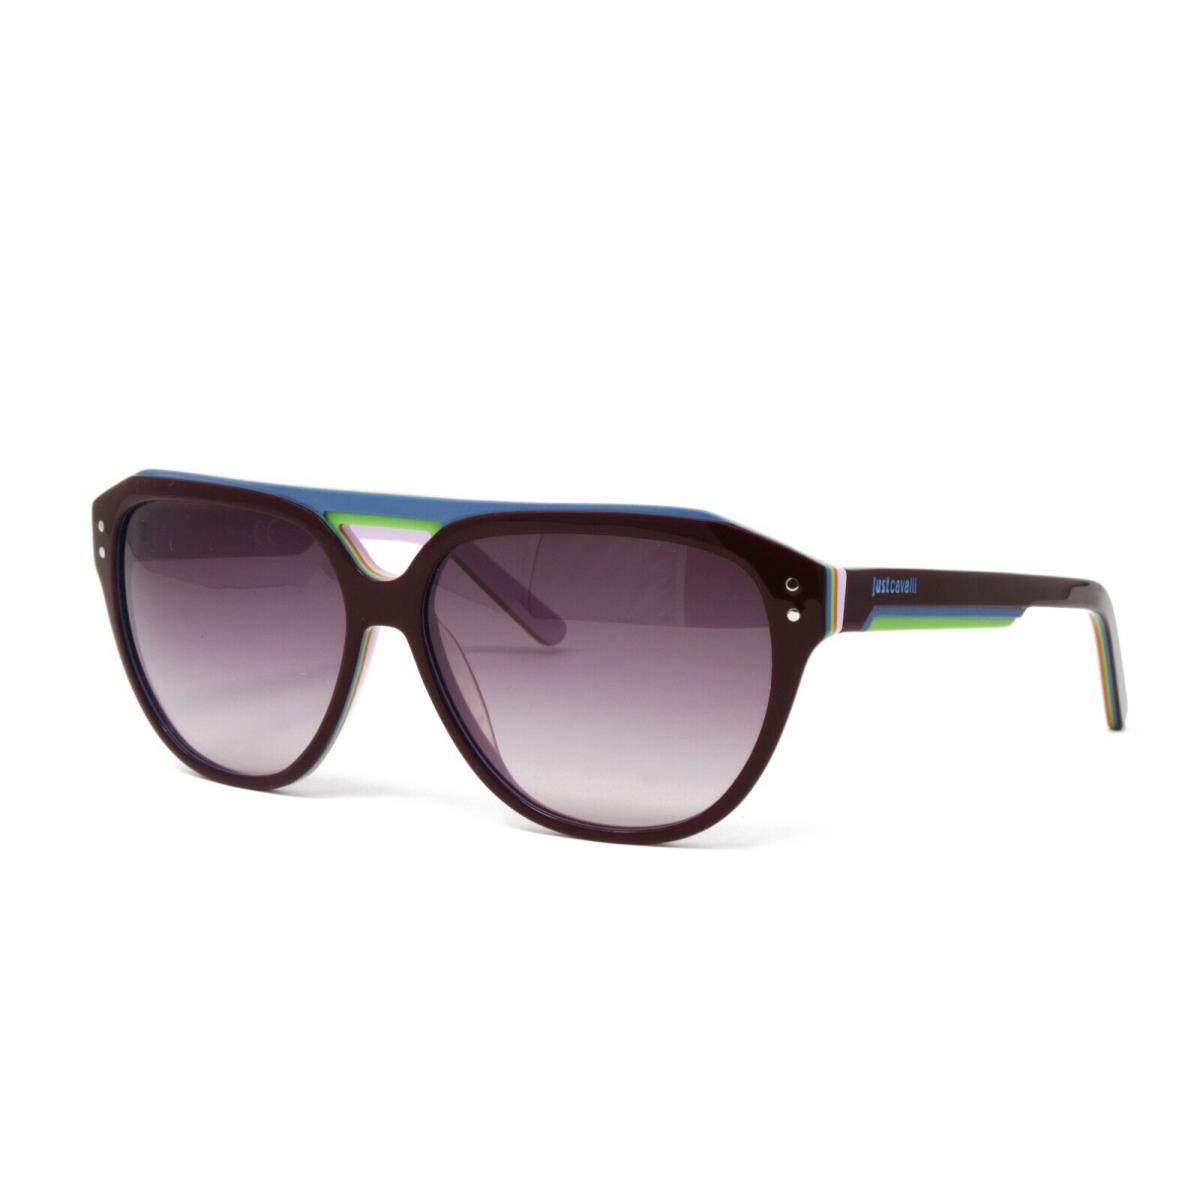 Just Cavalli Sunglasses Unisex Square JC505S 71B Burgundy/pink/blue/green Orange